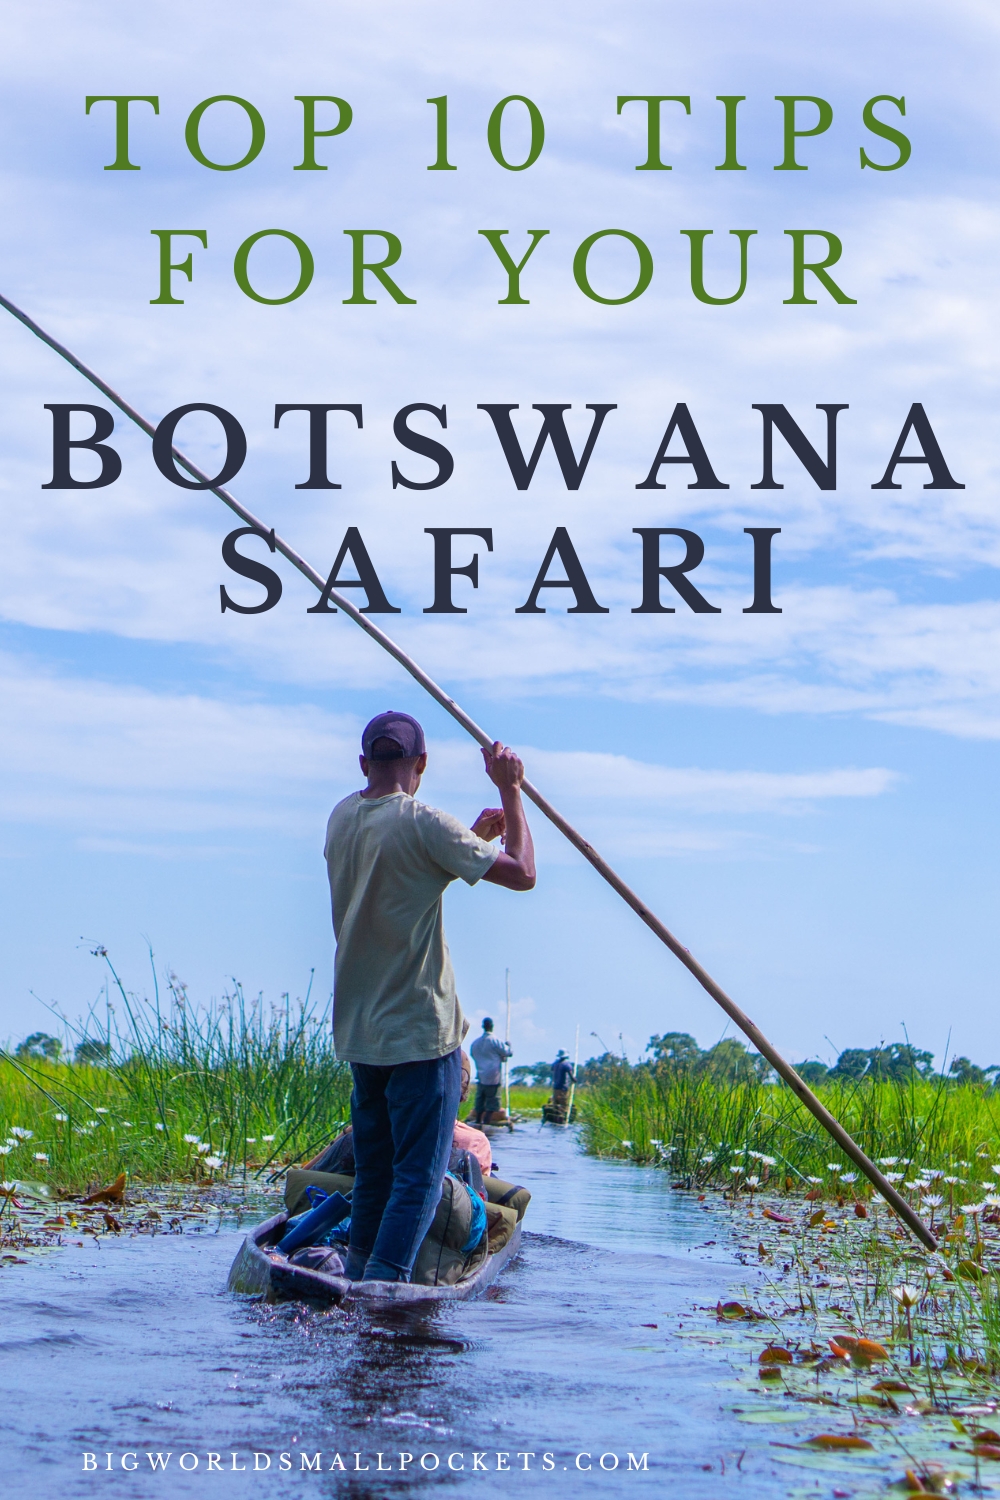 Top 10 Tips for Your Botswana Safari